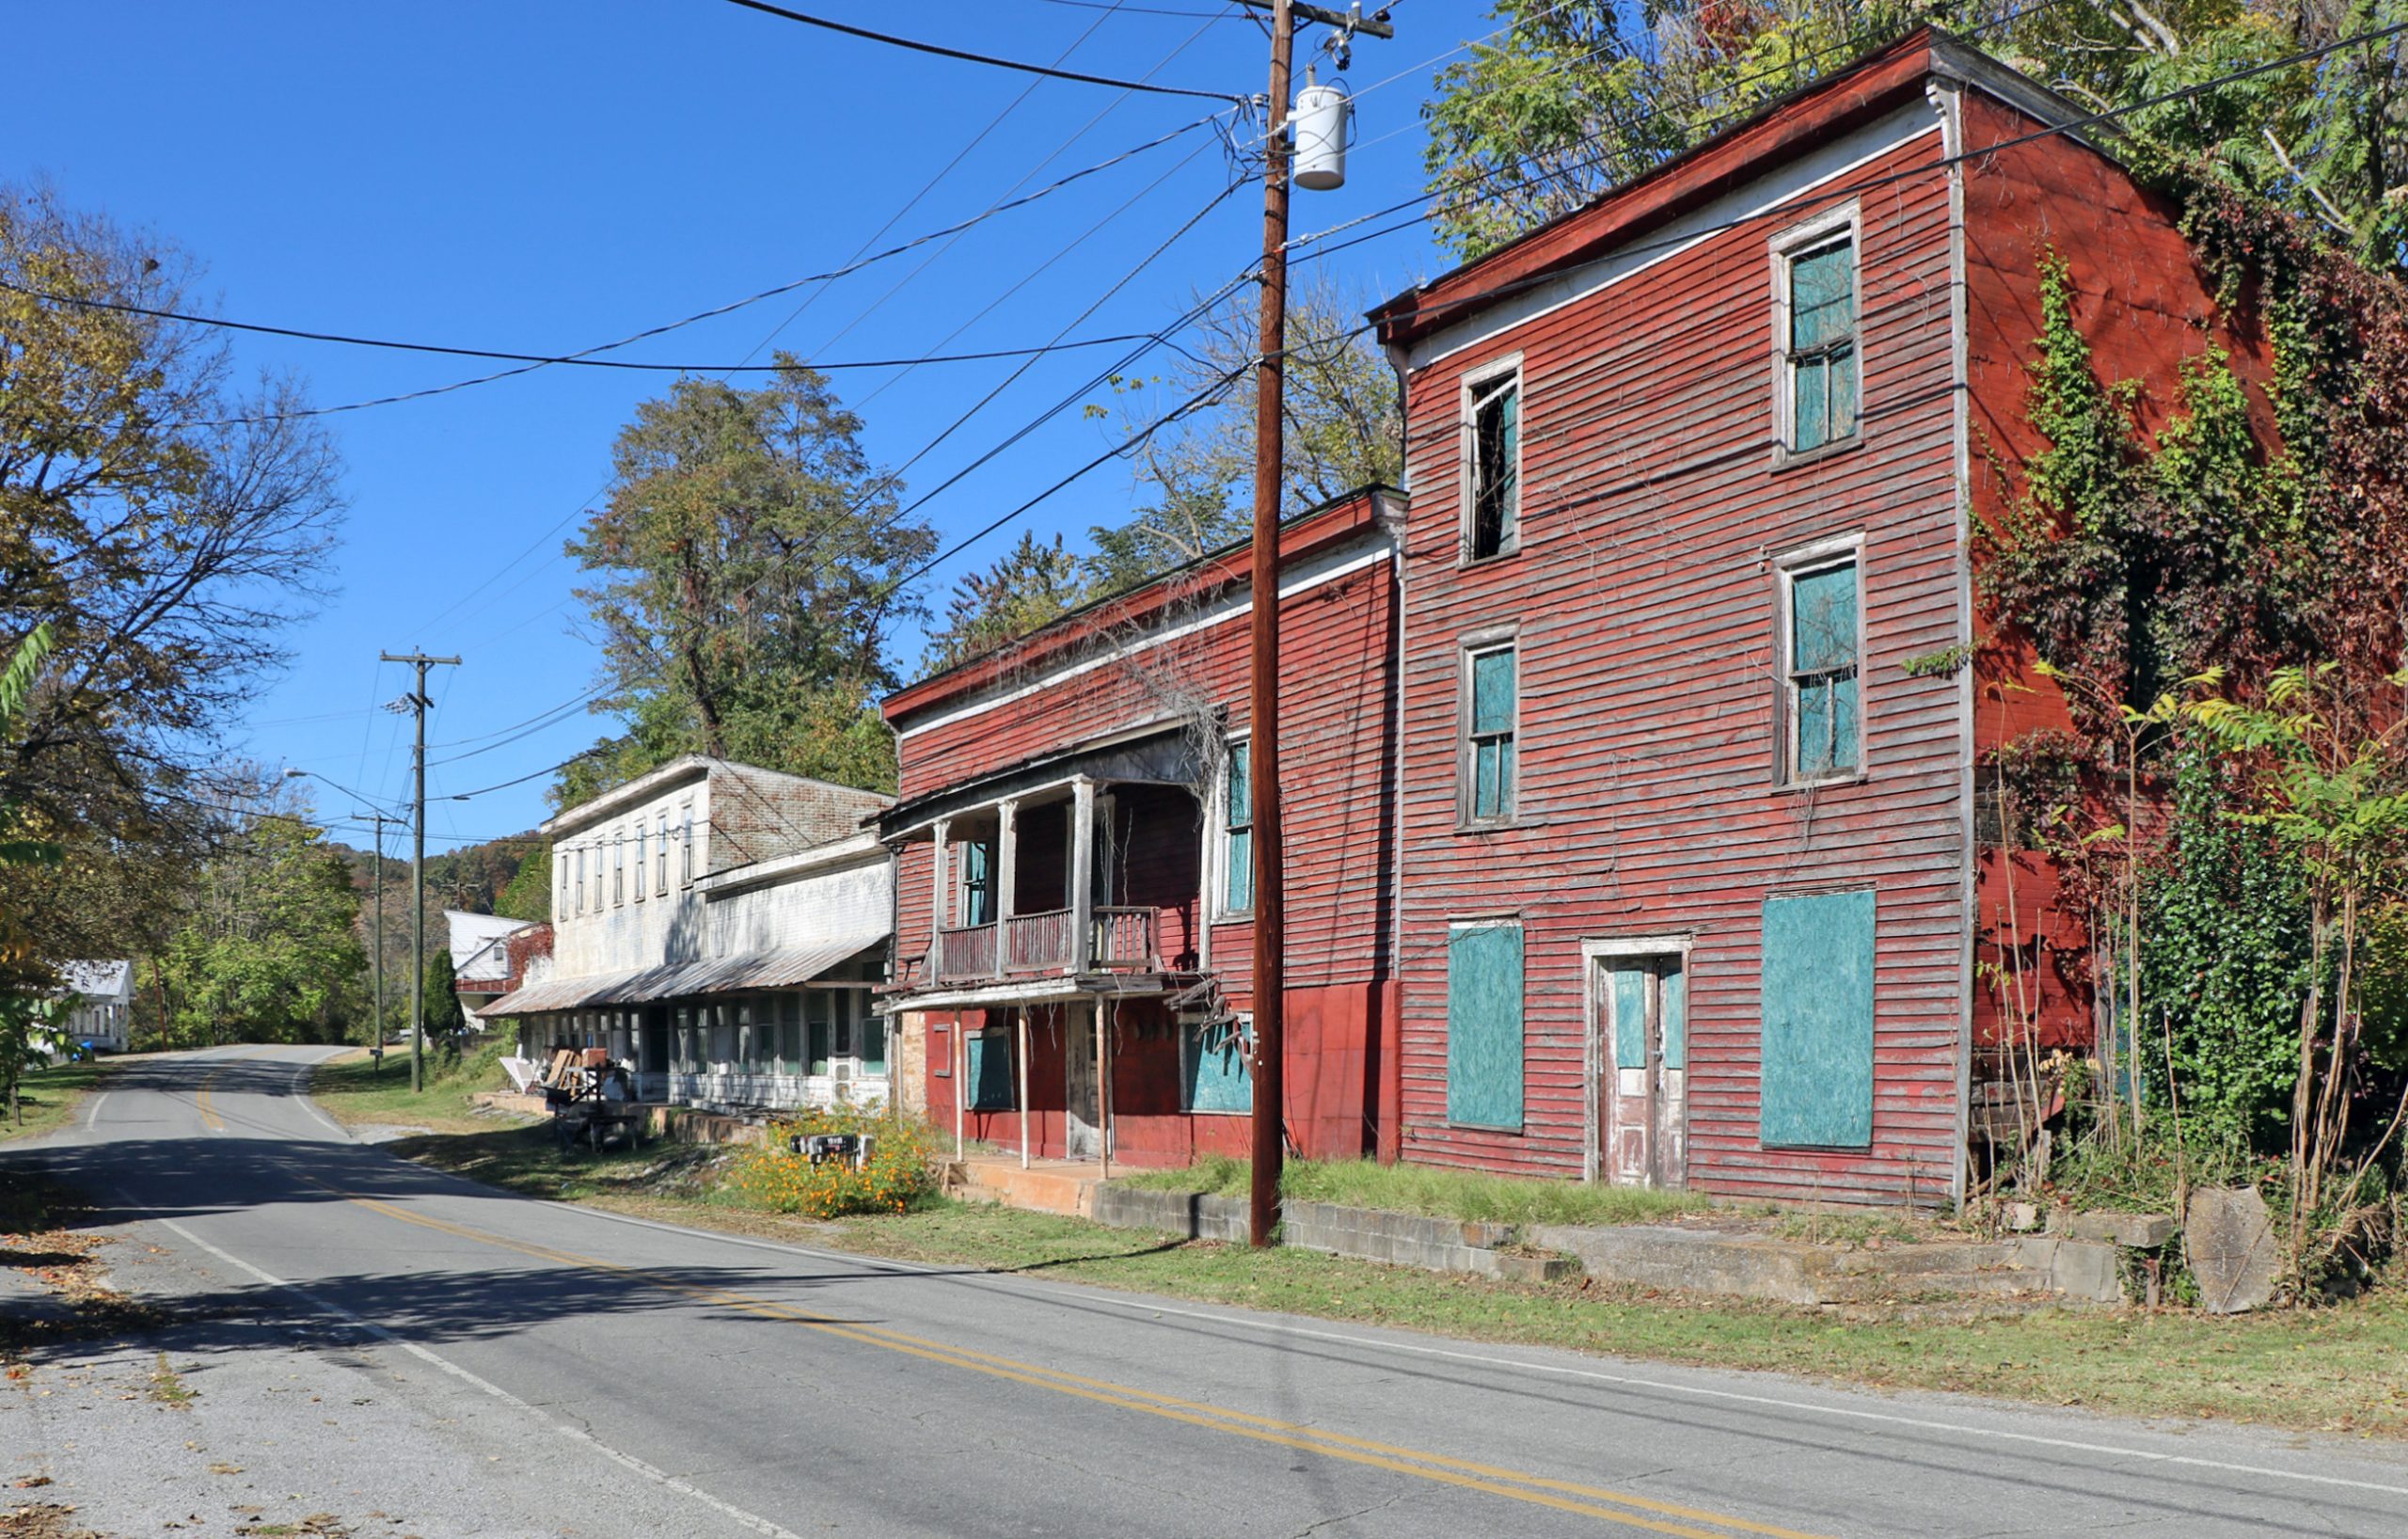 Shawsville Historic District